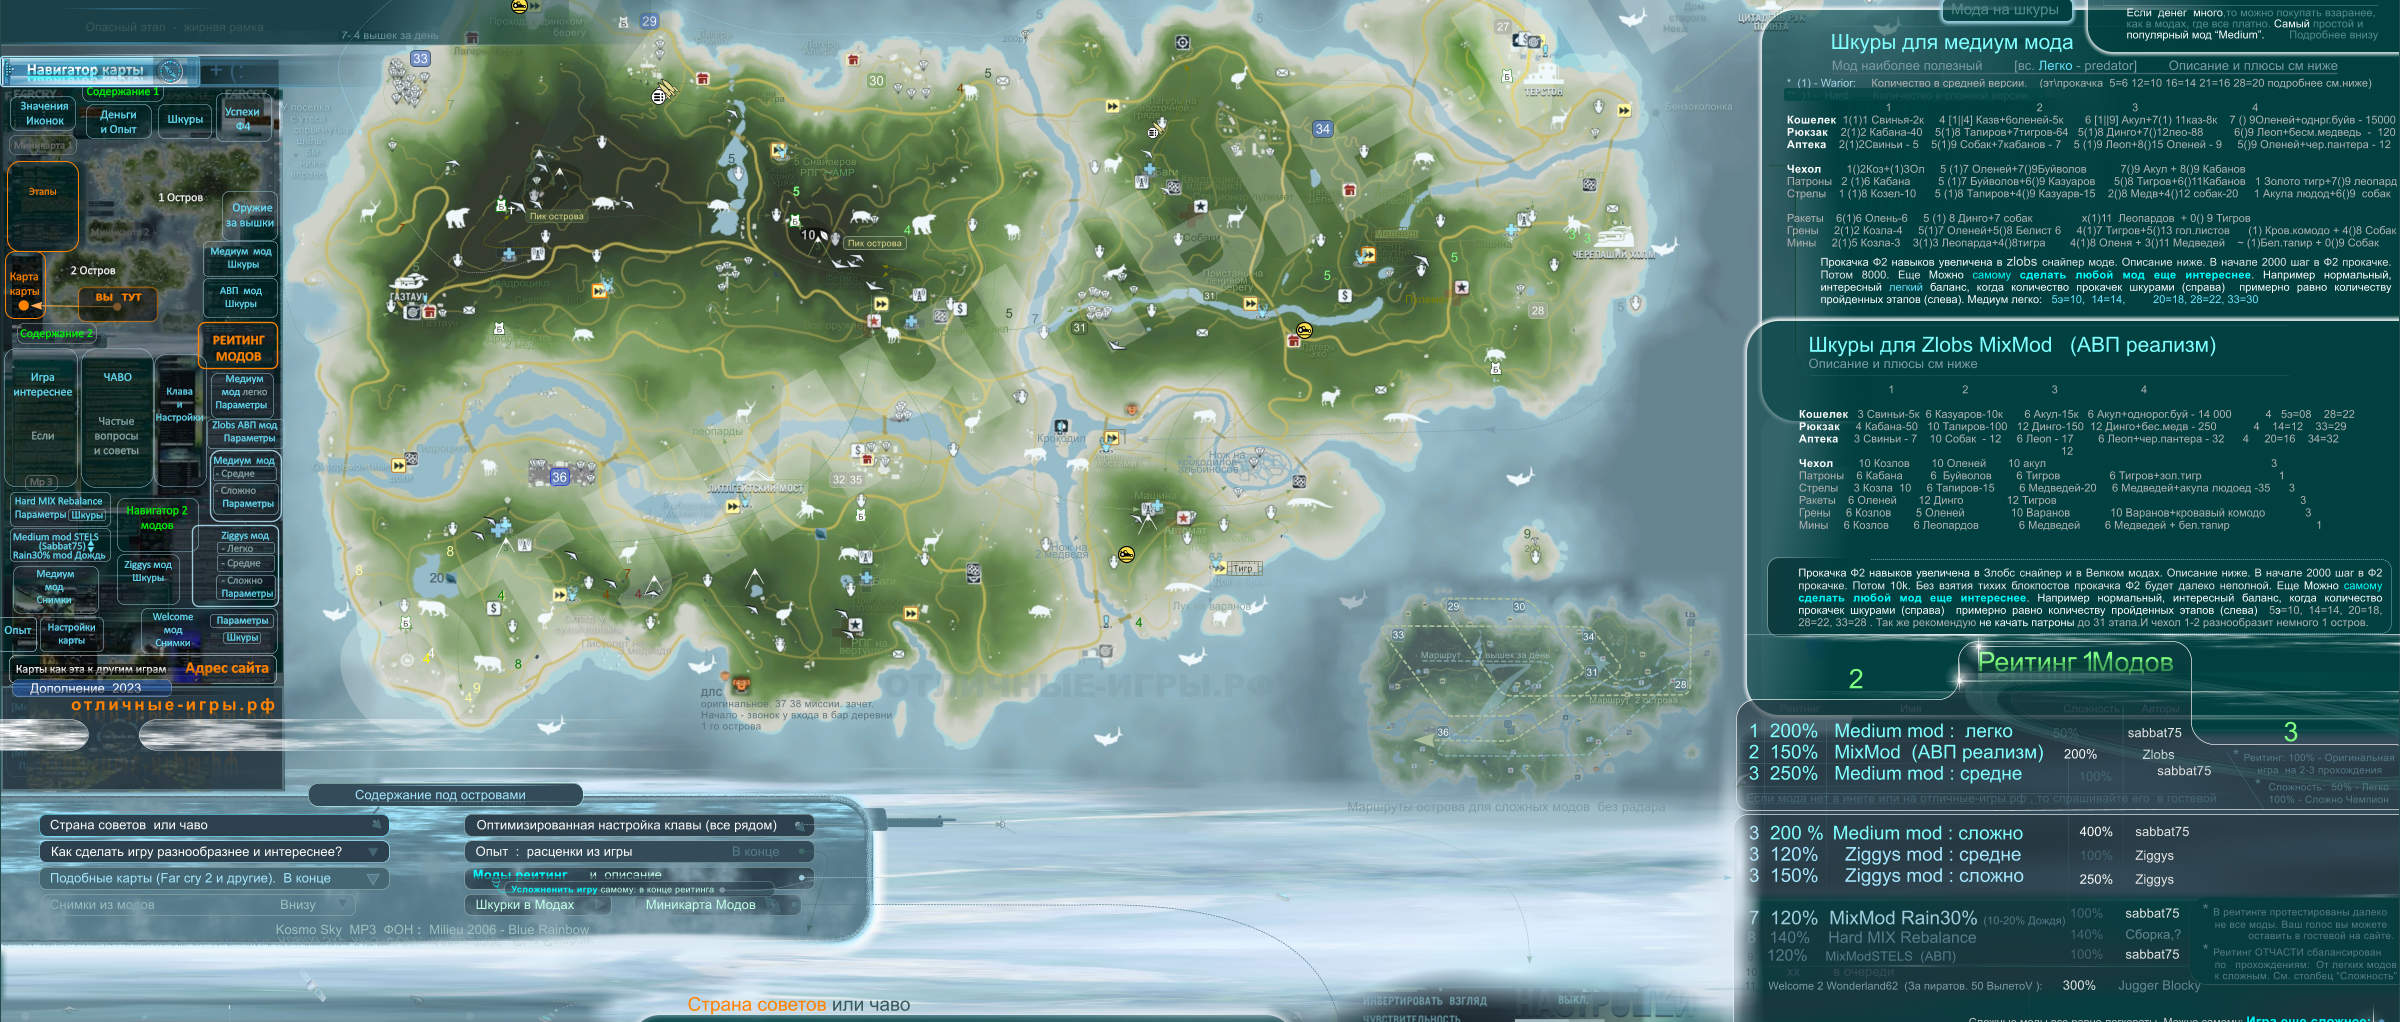 Far cry 3 самая полная карта в мире, Far cry 3 total full map 2022